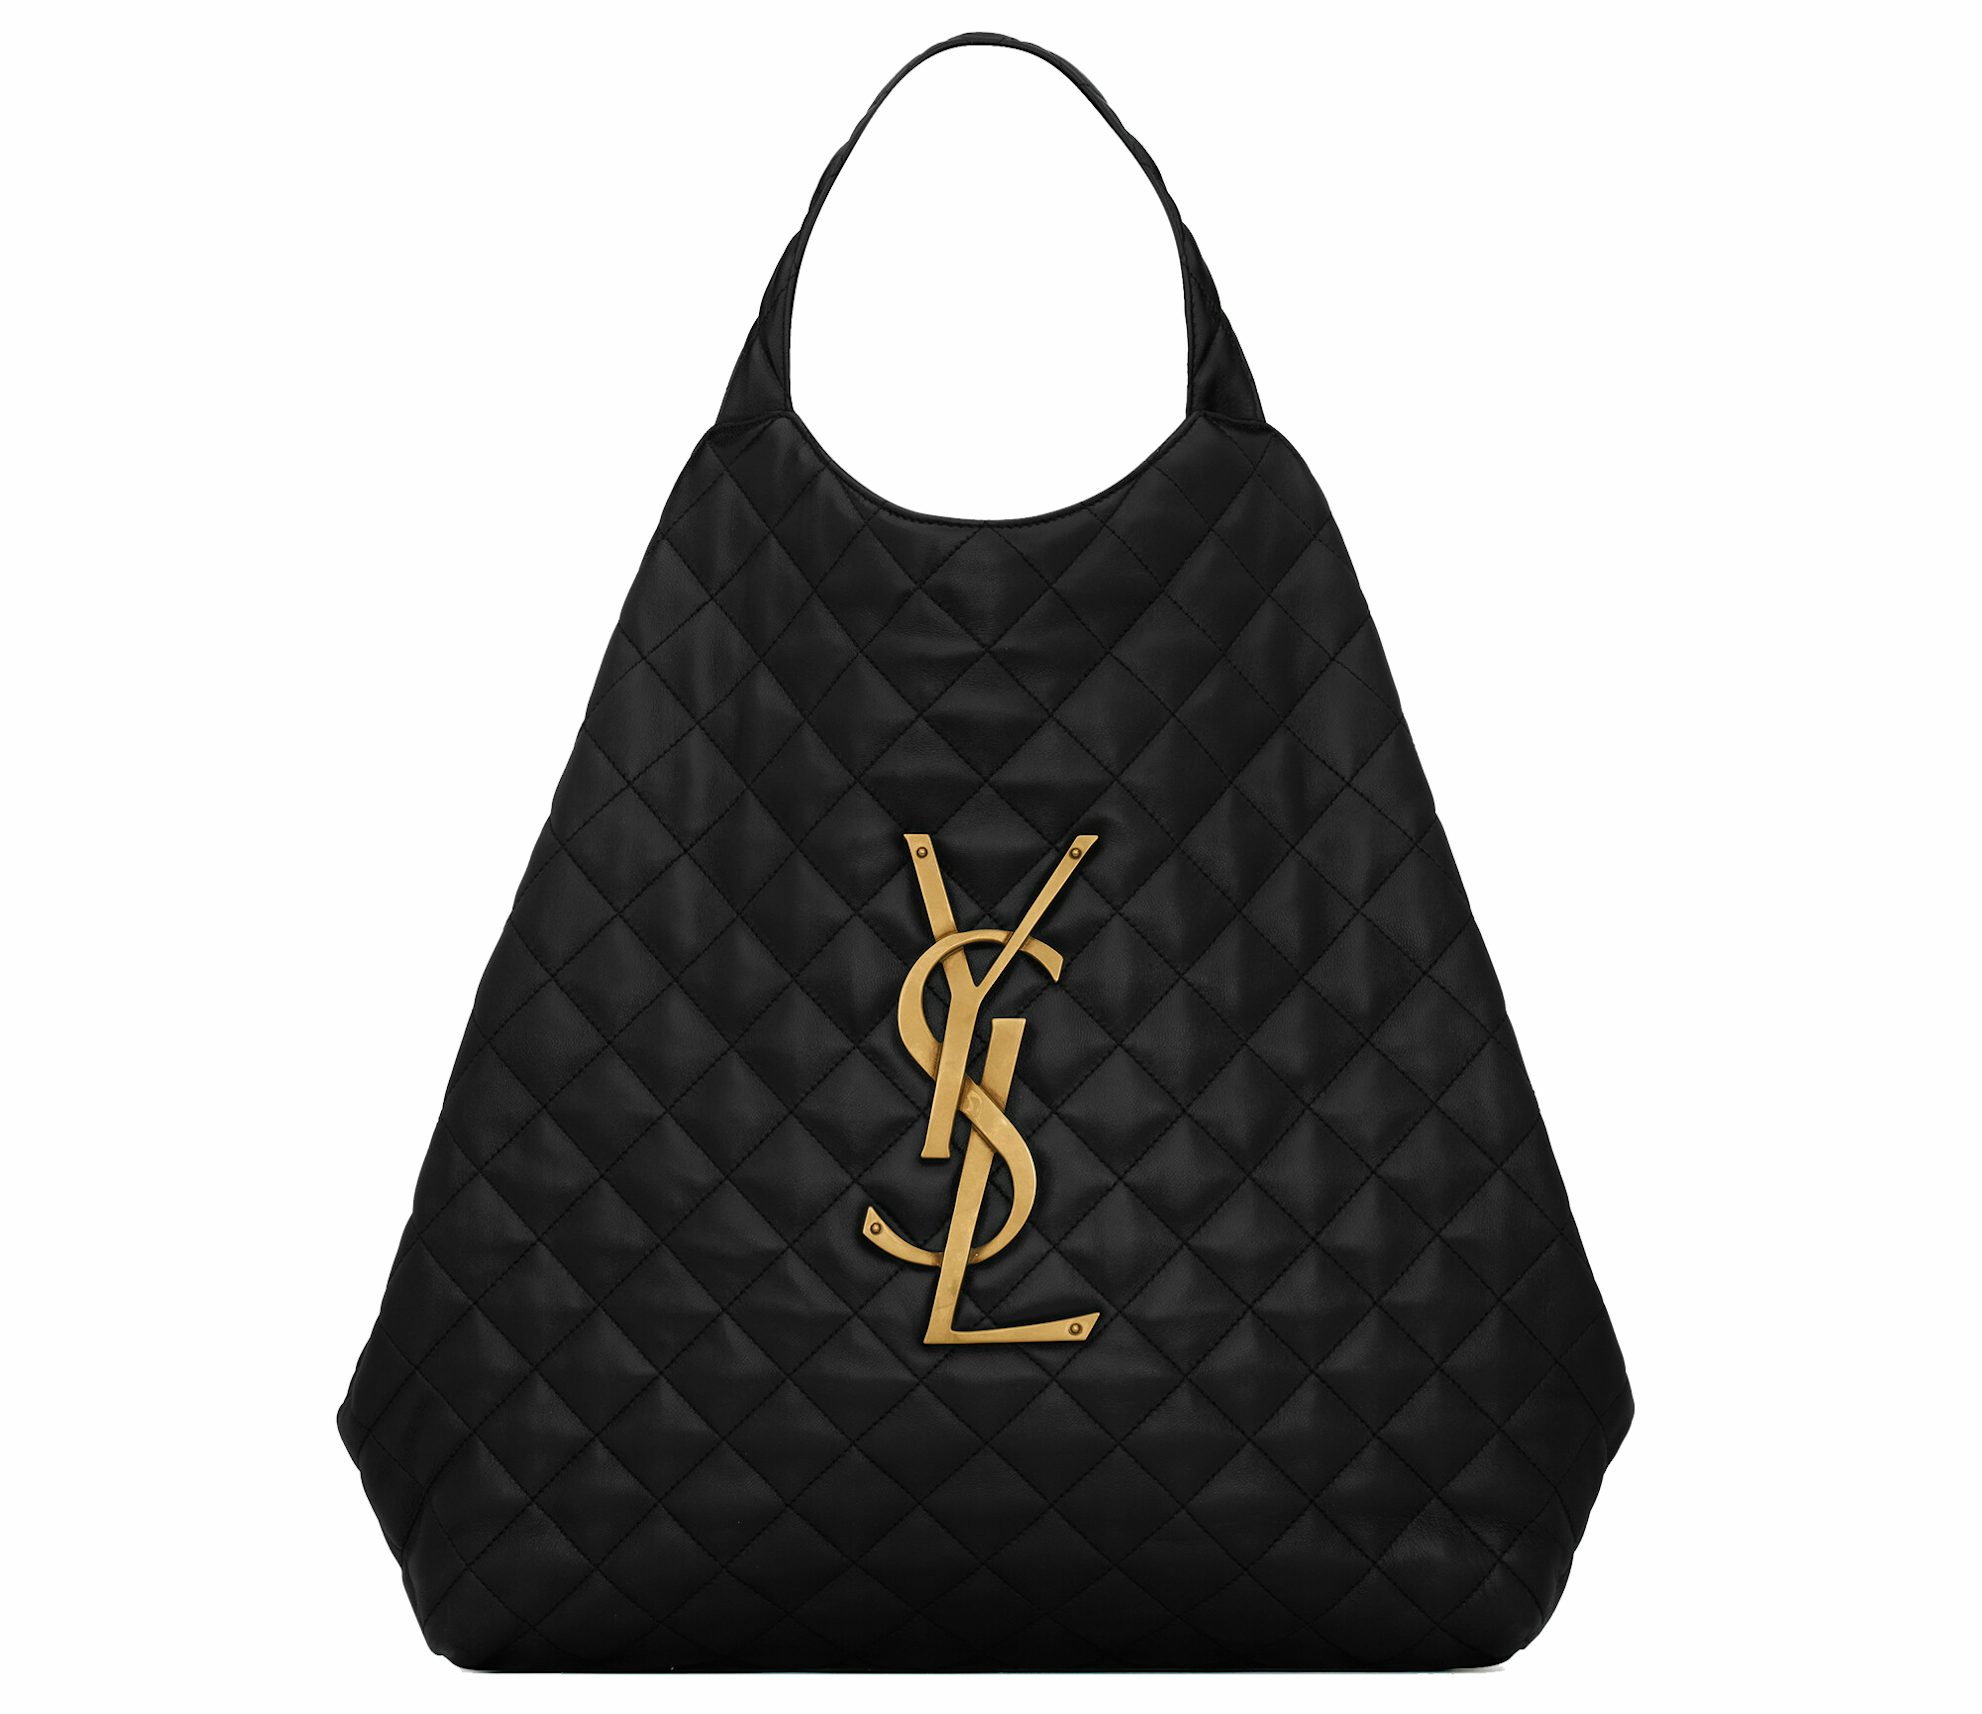 NEW YSL Saint Laurent Leather E/W Shopper Tote Bag In White & Gold  Hardware